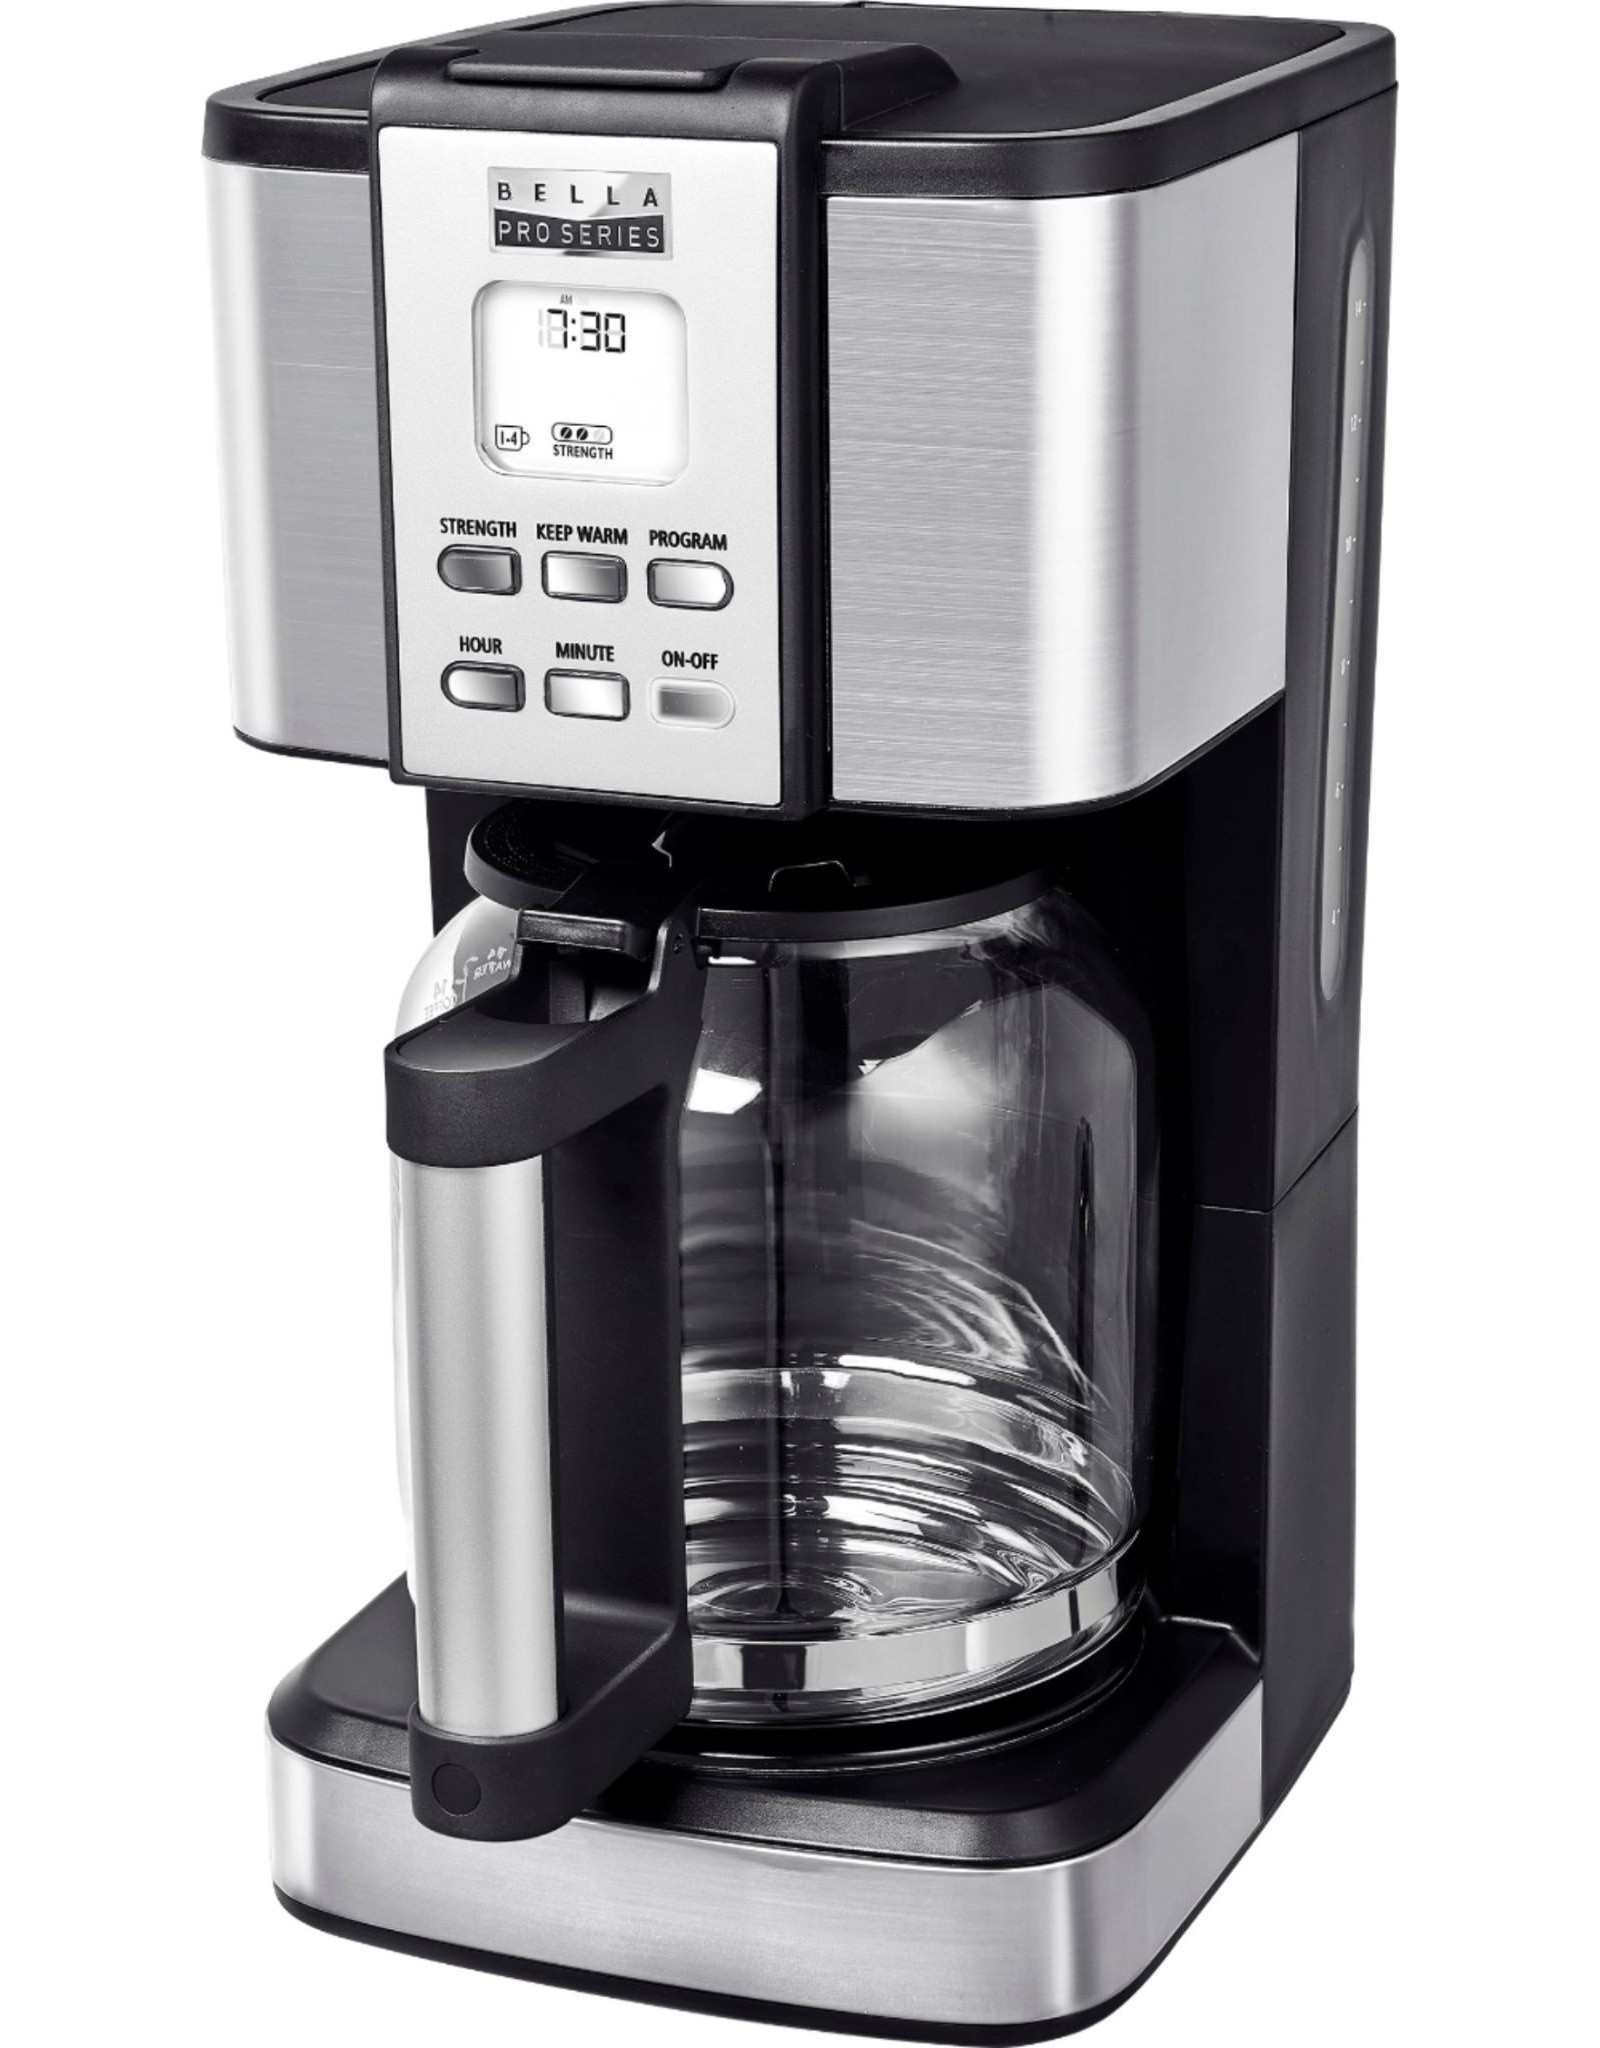 90074 Bella - Pro Series 14-Cup Coffeemaker - Stainless Steel - Black Friday